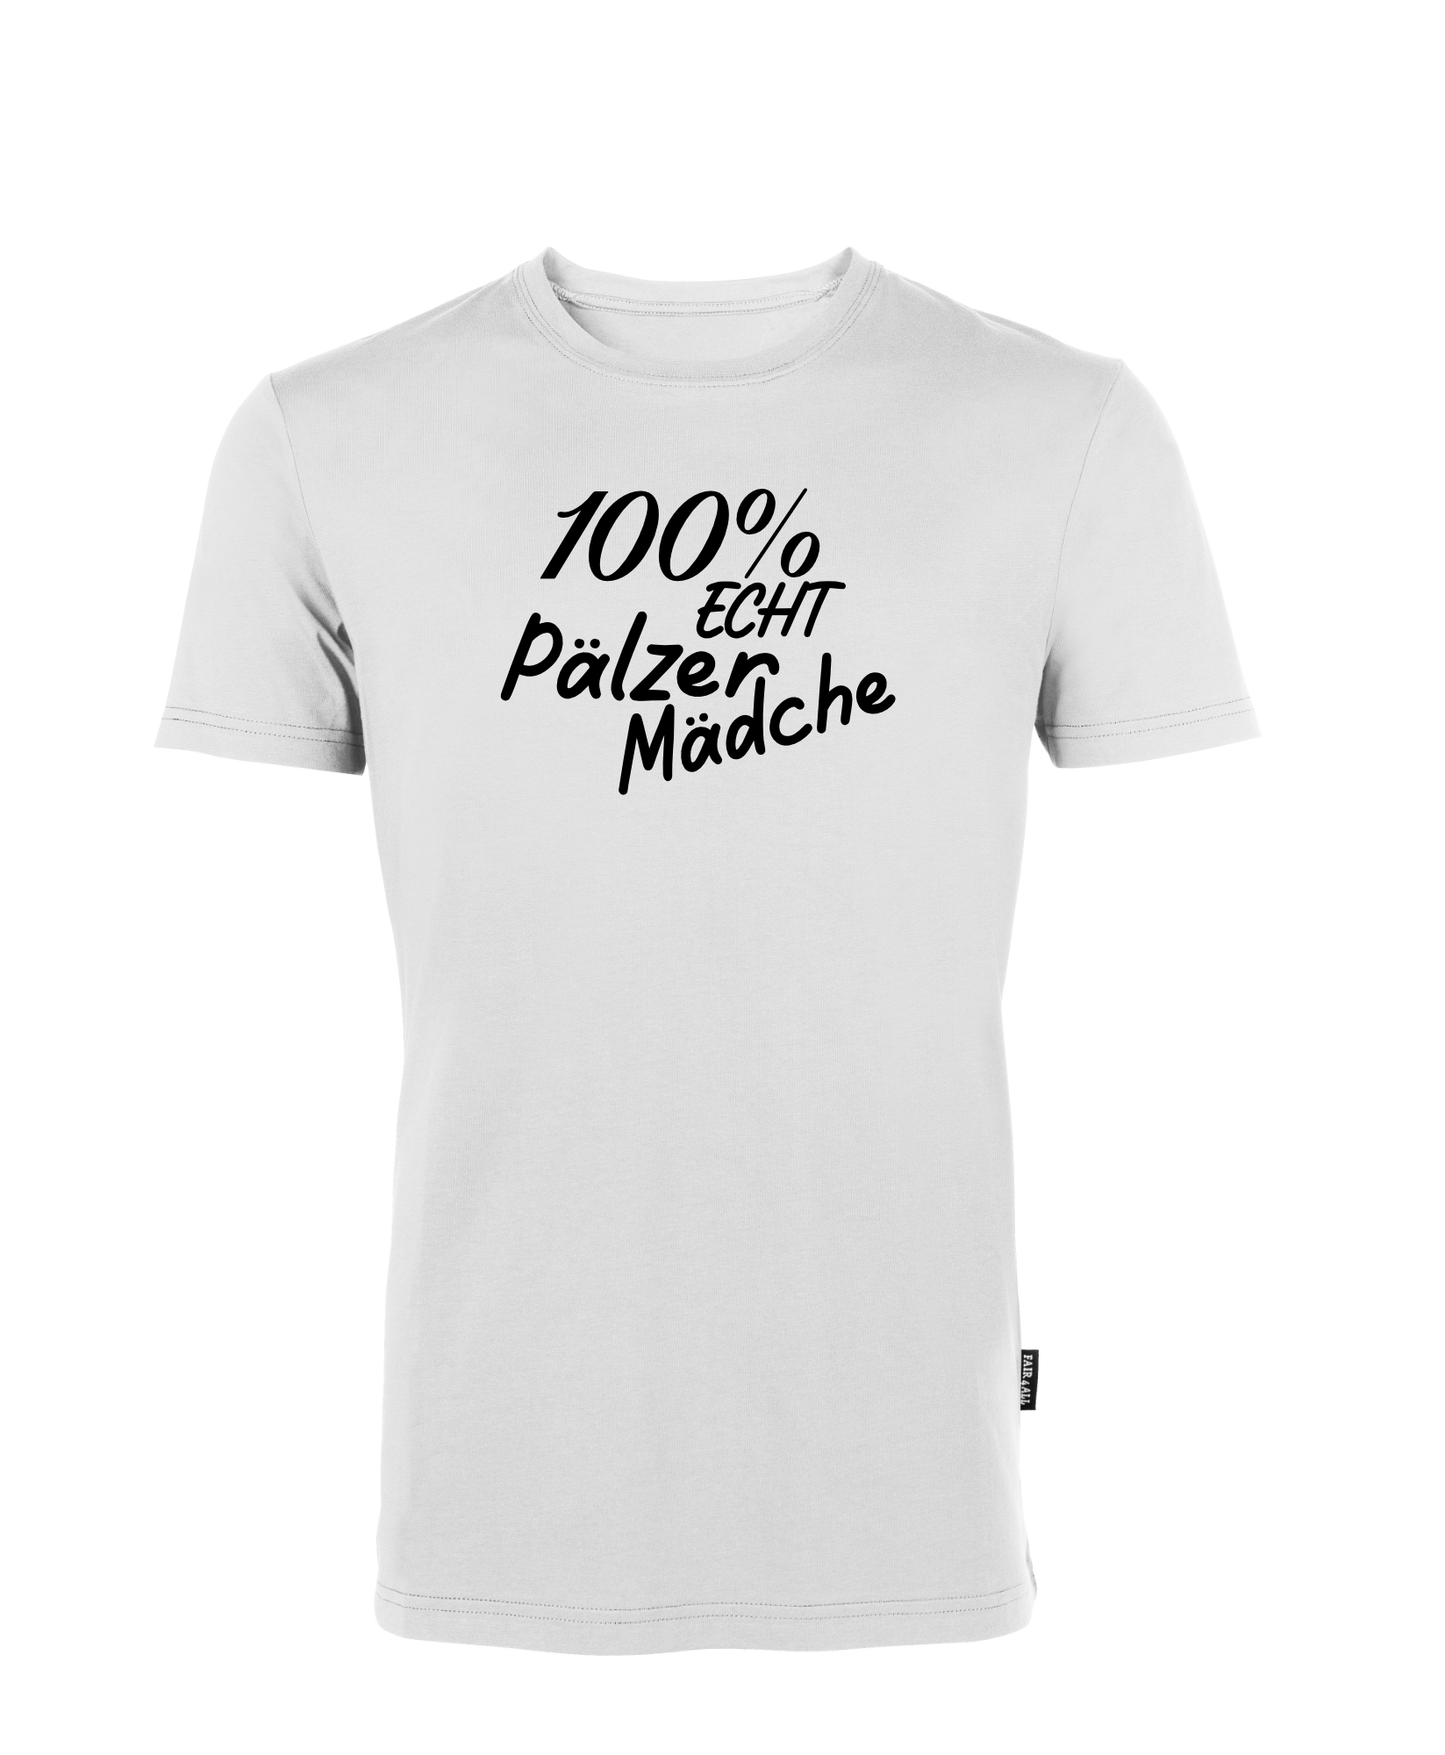 100% Pälzer Mädche - pREHmium T-Shirt Unisex